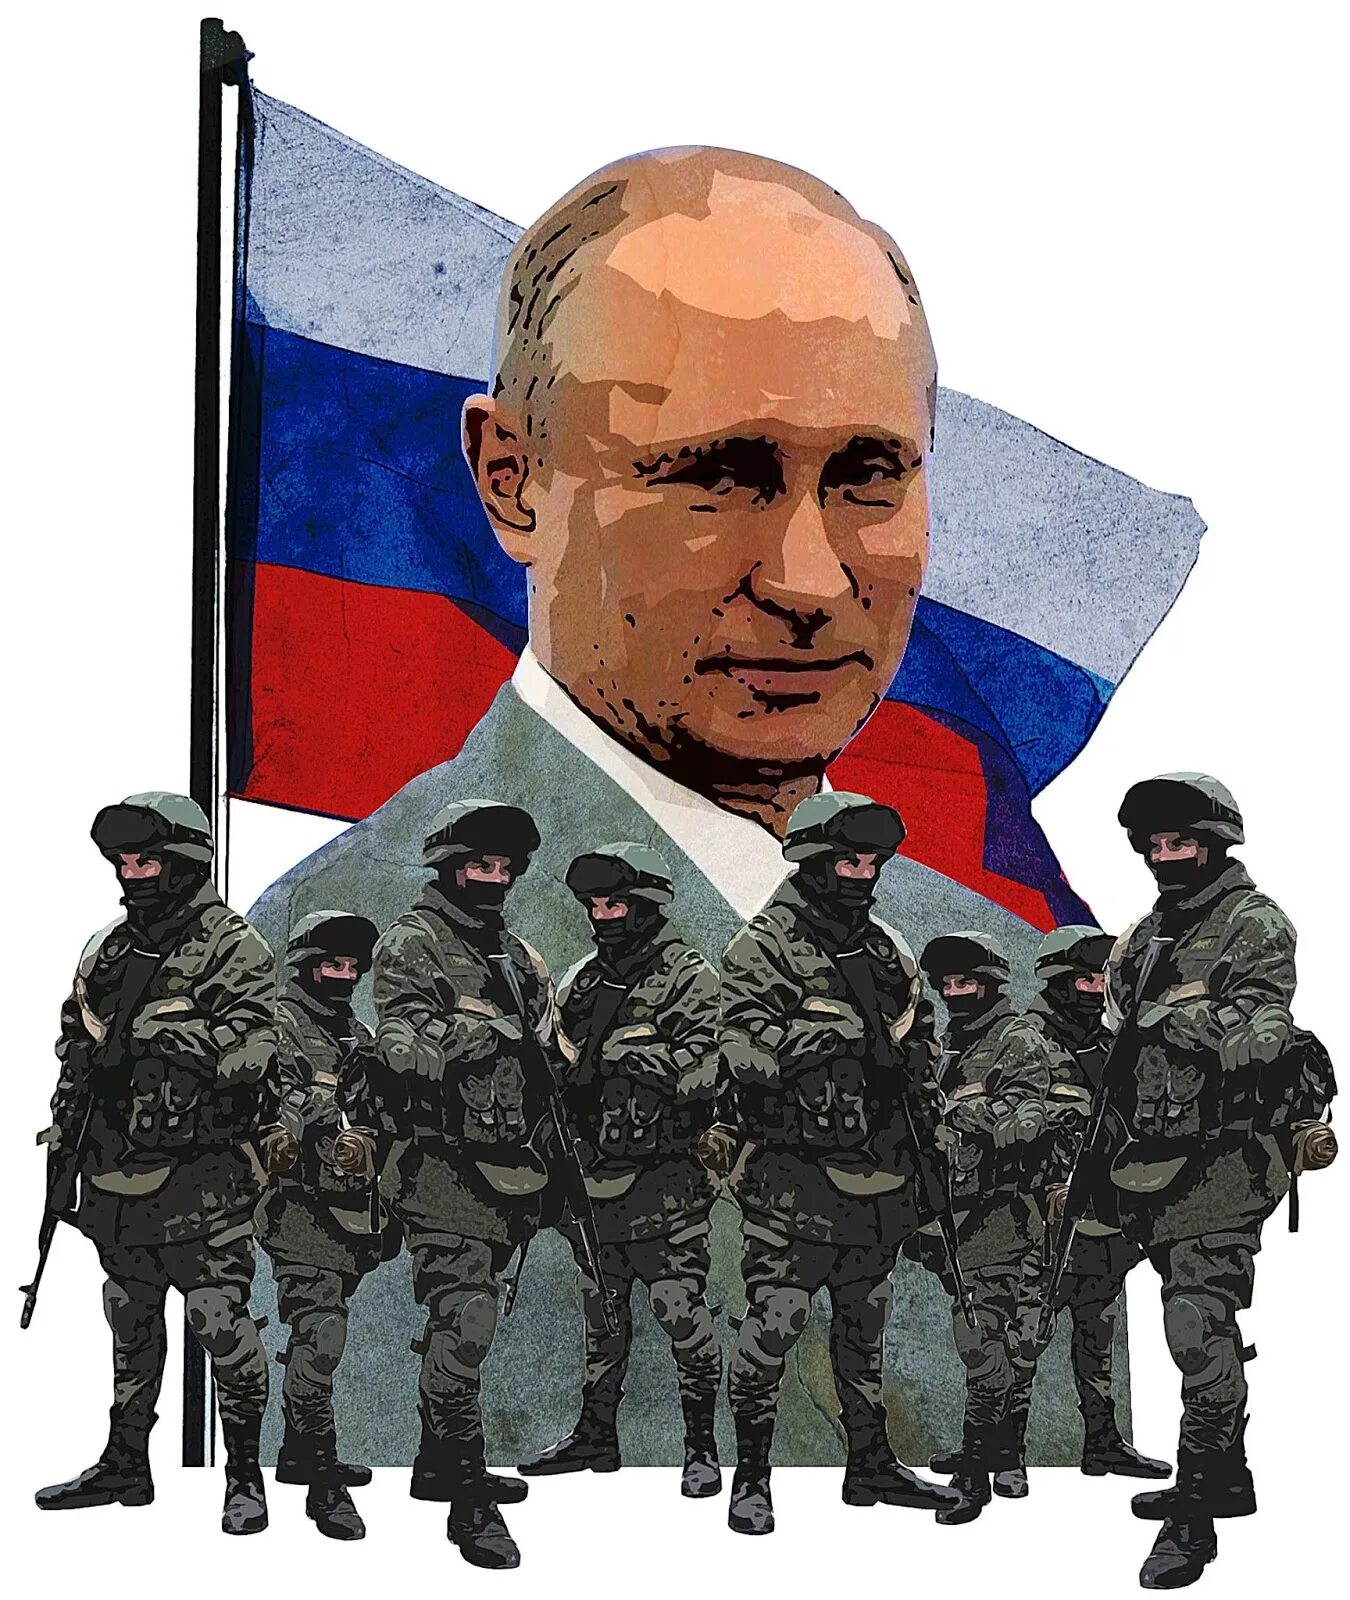 Путинские войска. Русские войска на фоне флага. Русский солдат на фоне российского флага. Русский про ру